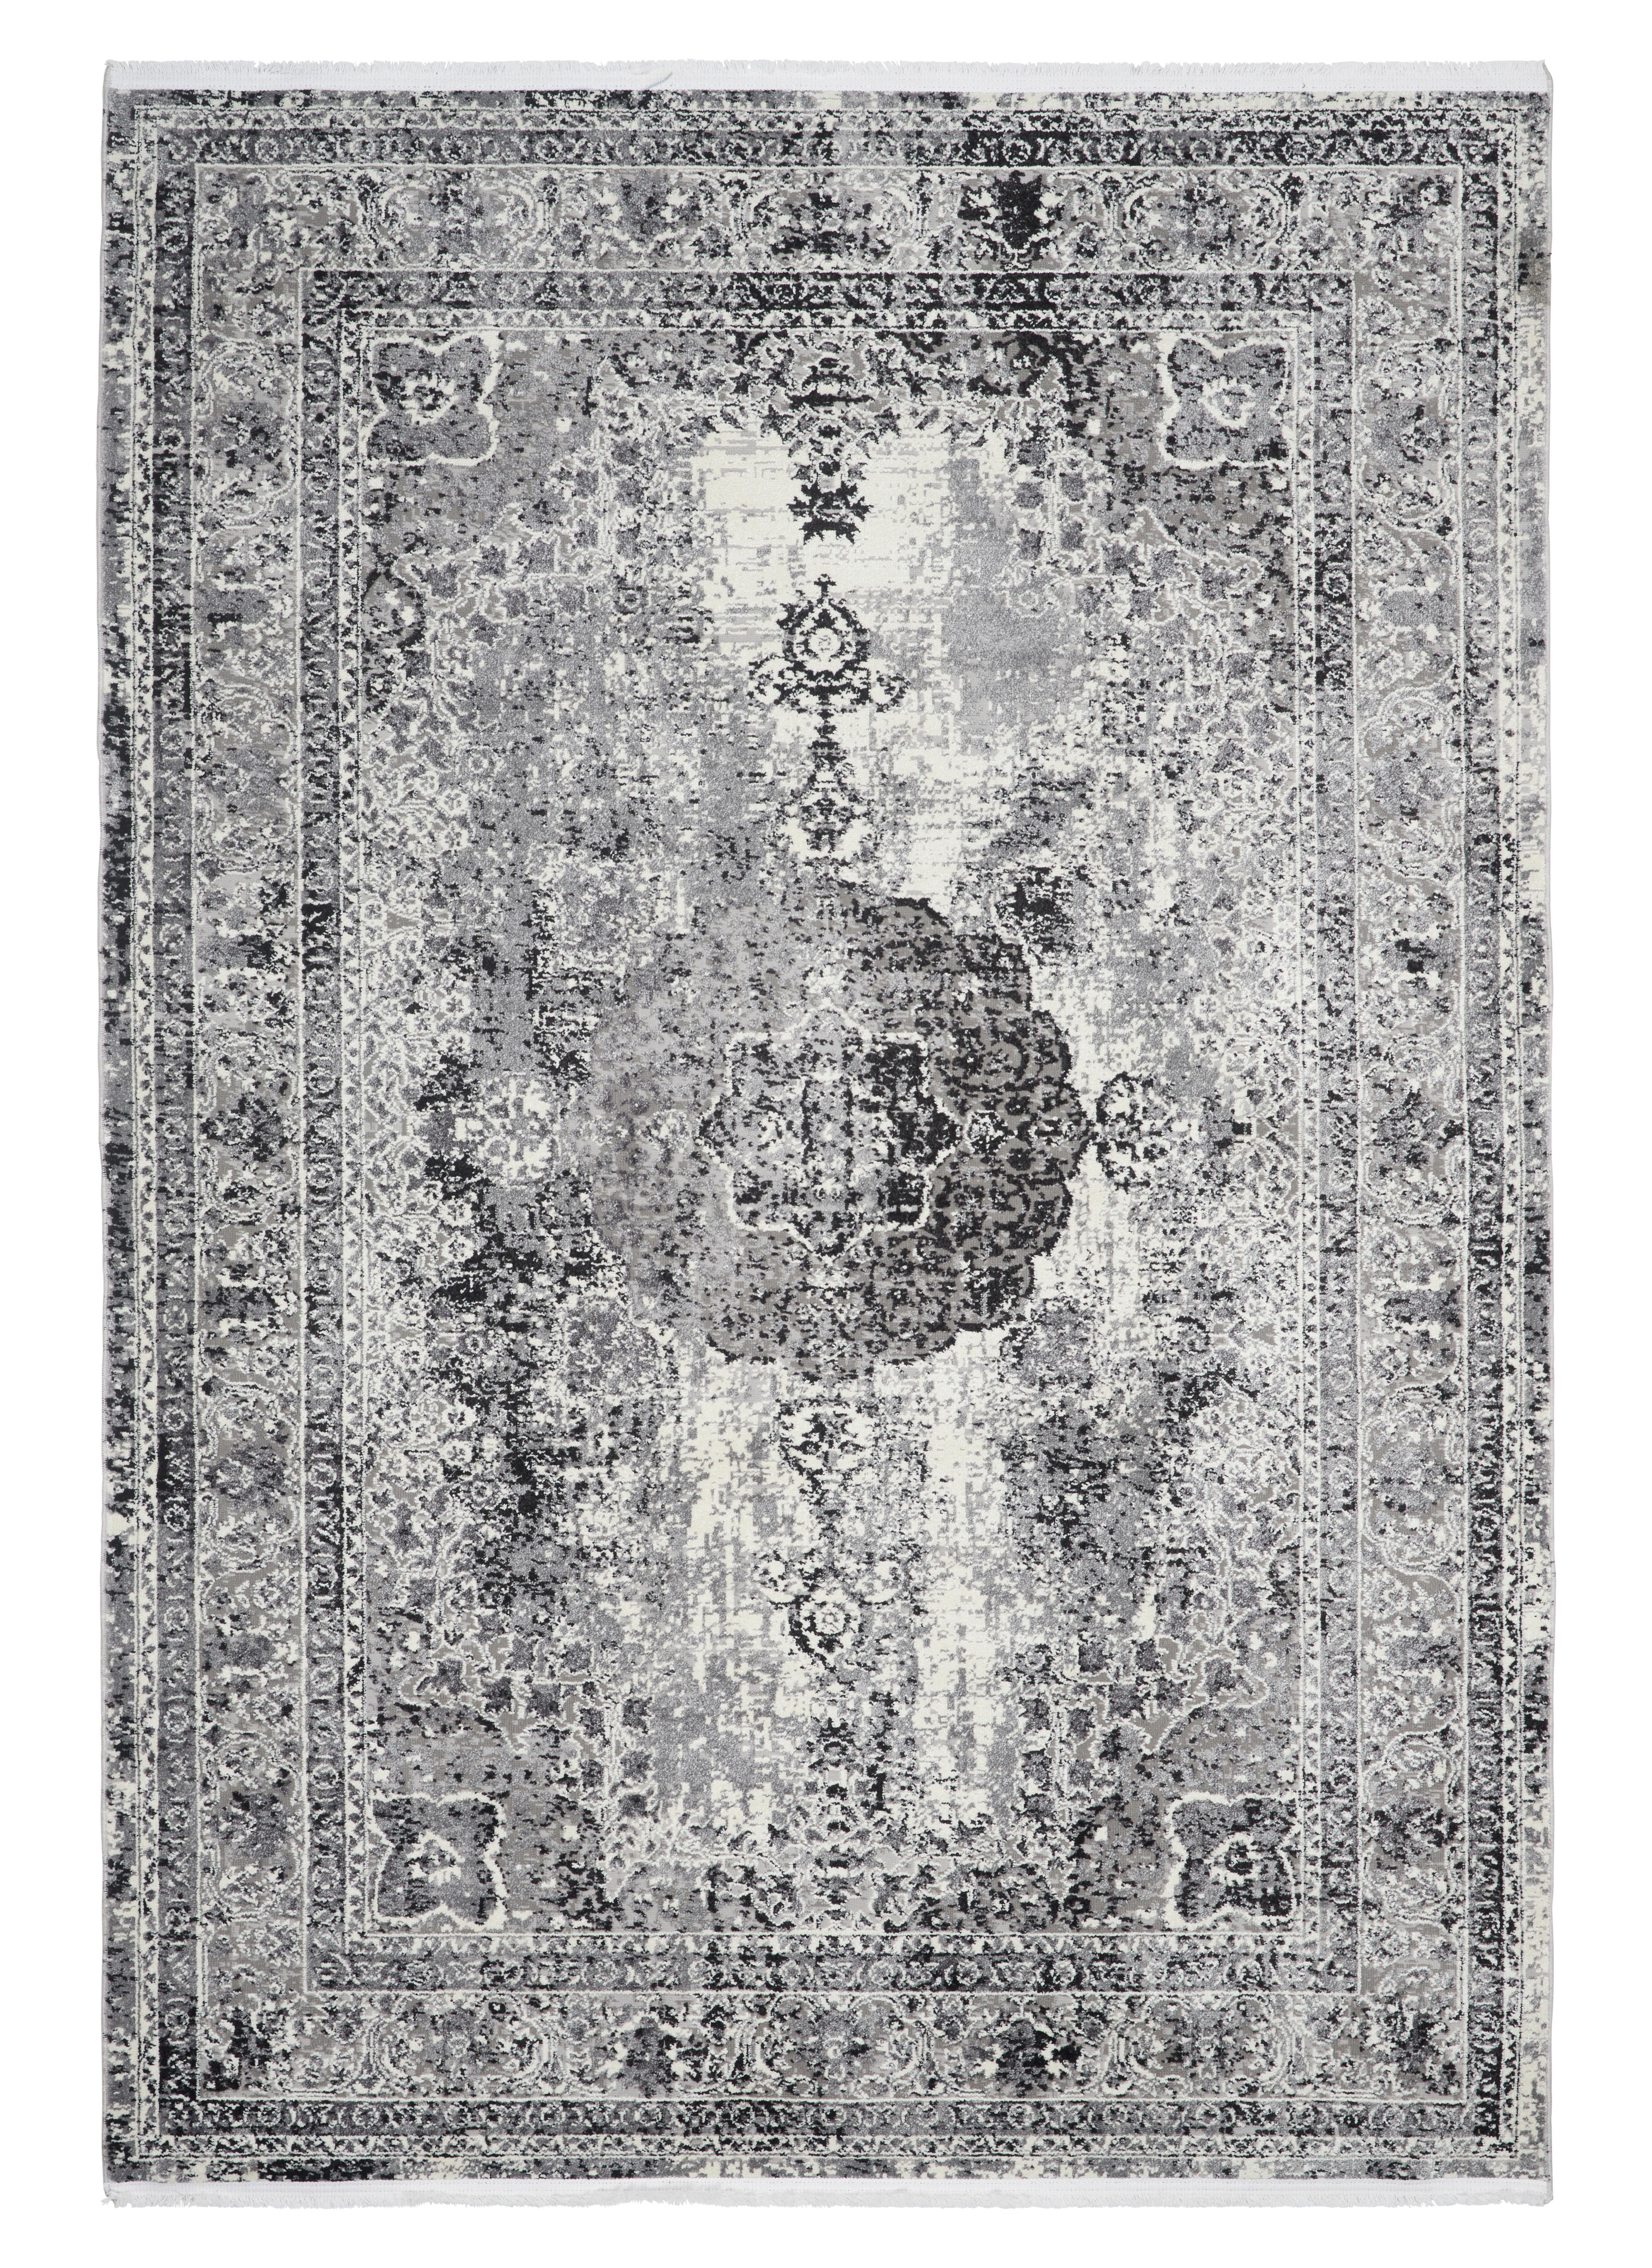 Tkaný Koberec Marcus 3, 160/230cm - krémová/světle šedá, textil (160/230cm) - Modern Living